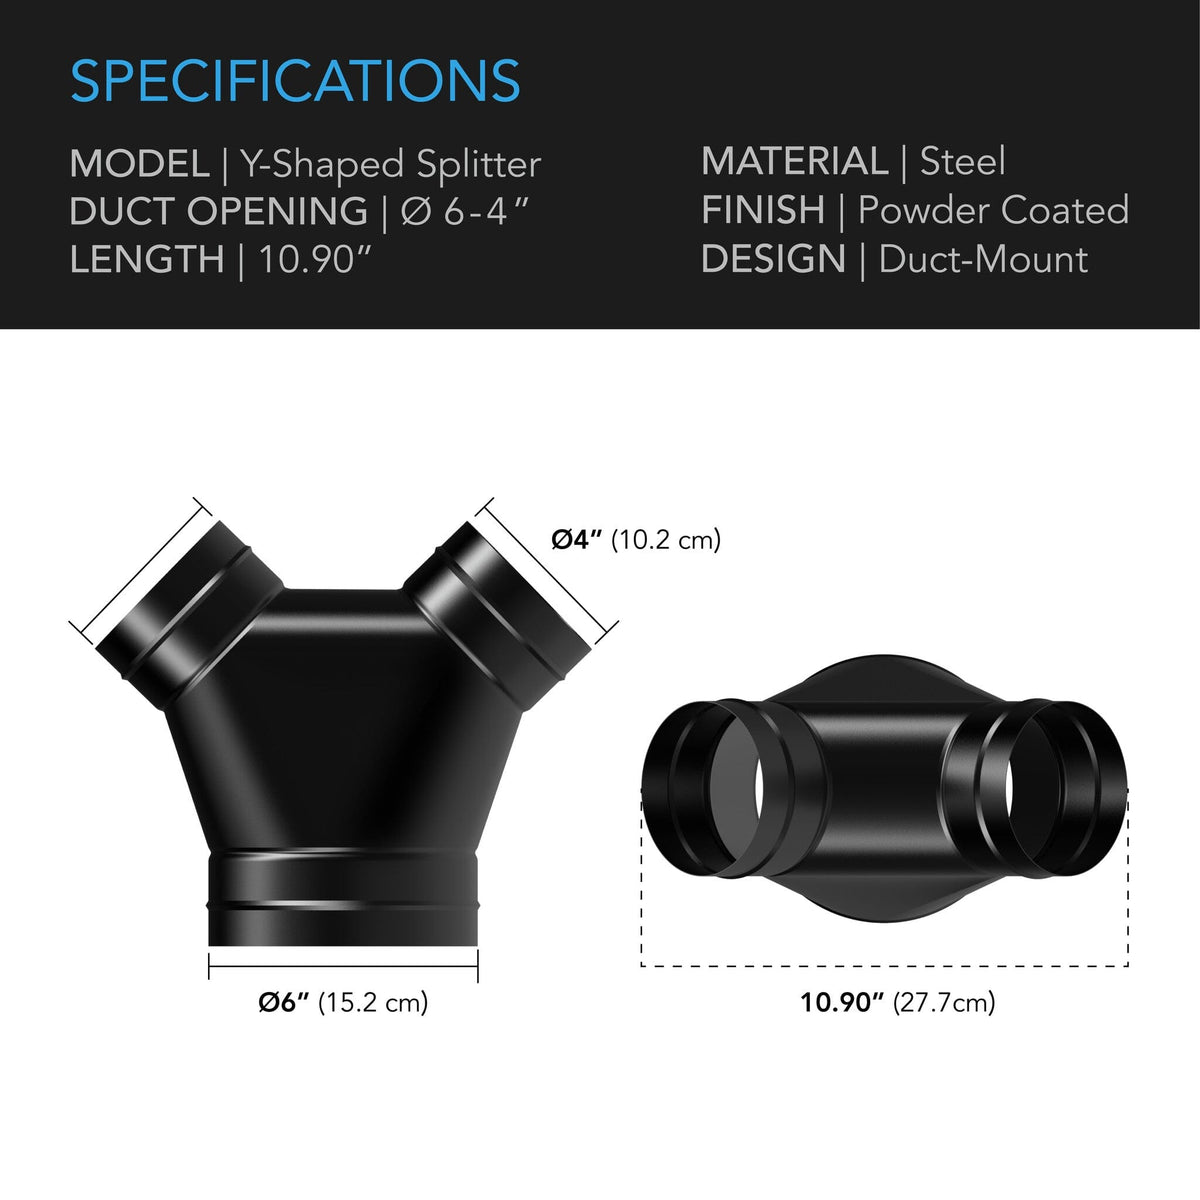 3-Way Duct Splitter specifications